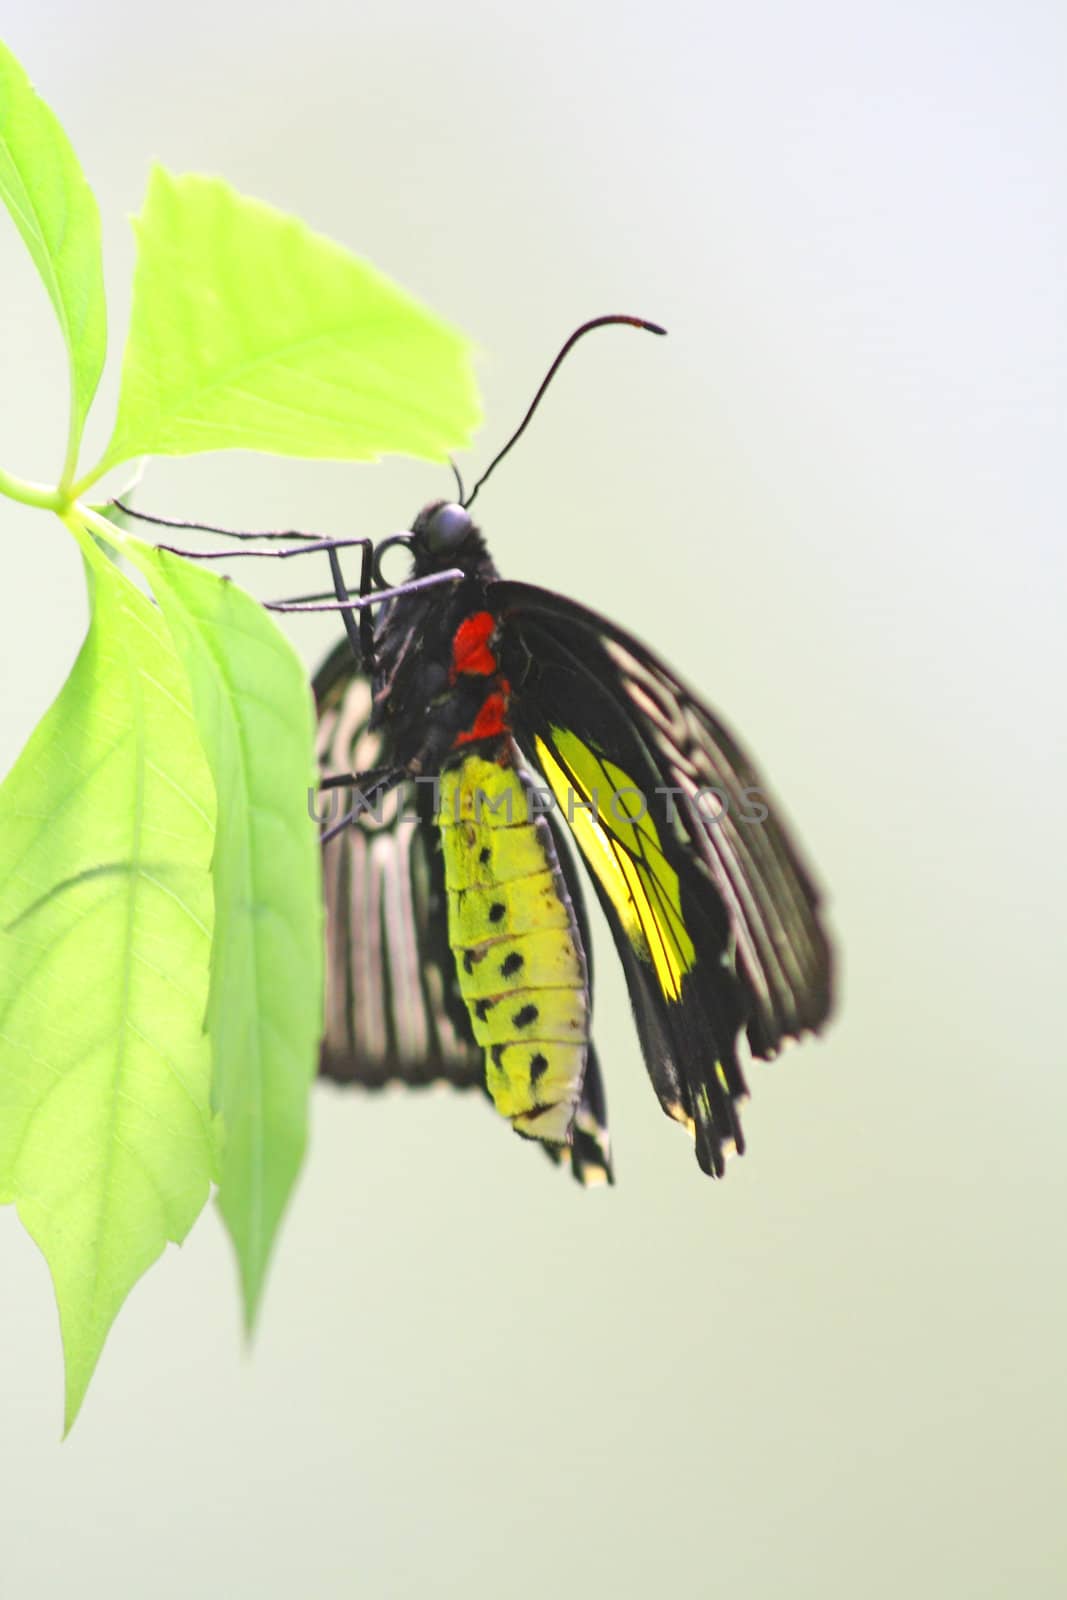 Tropical butterfly by Lessadar